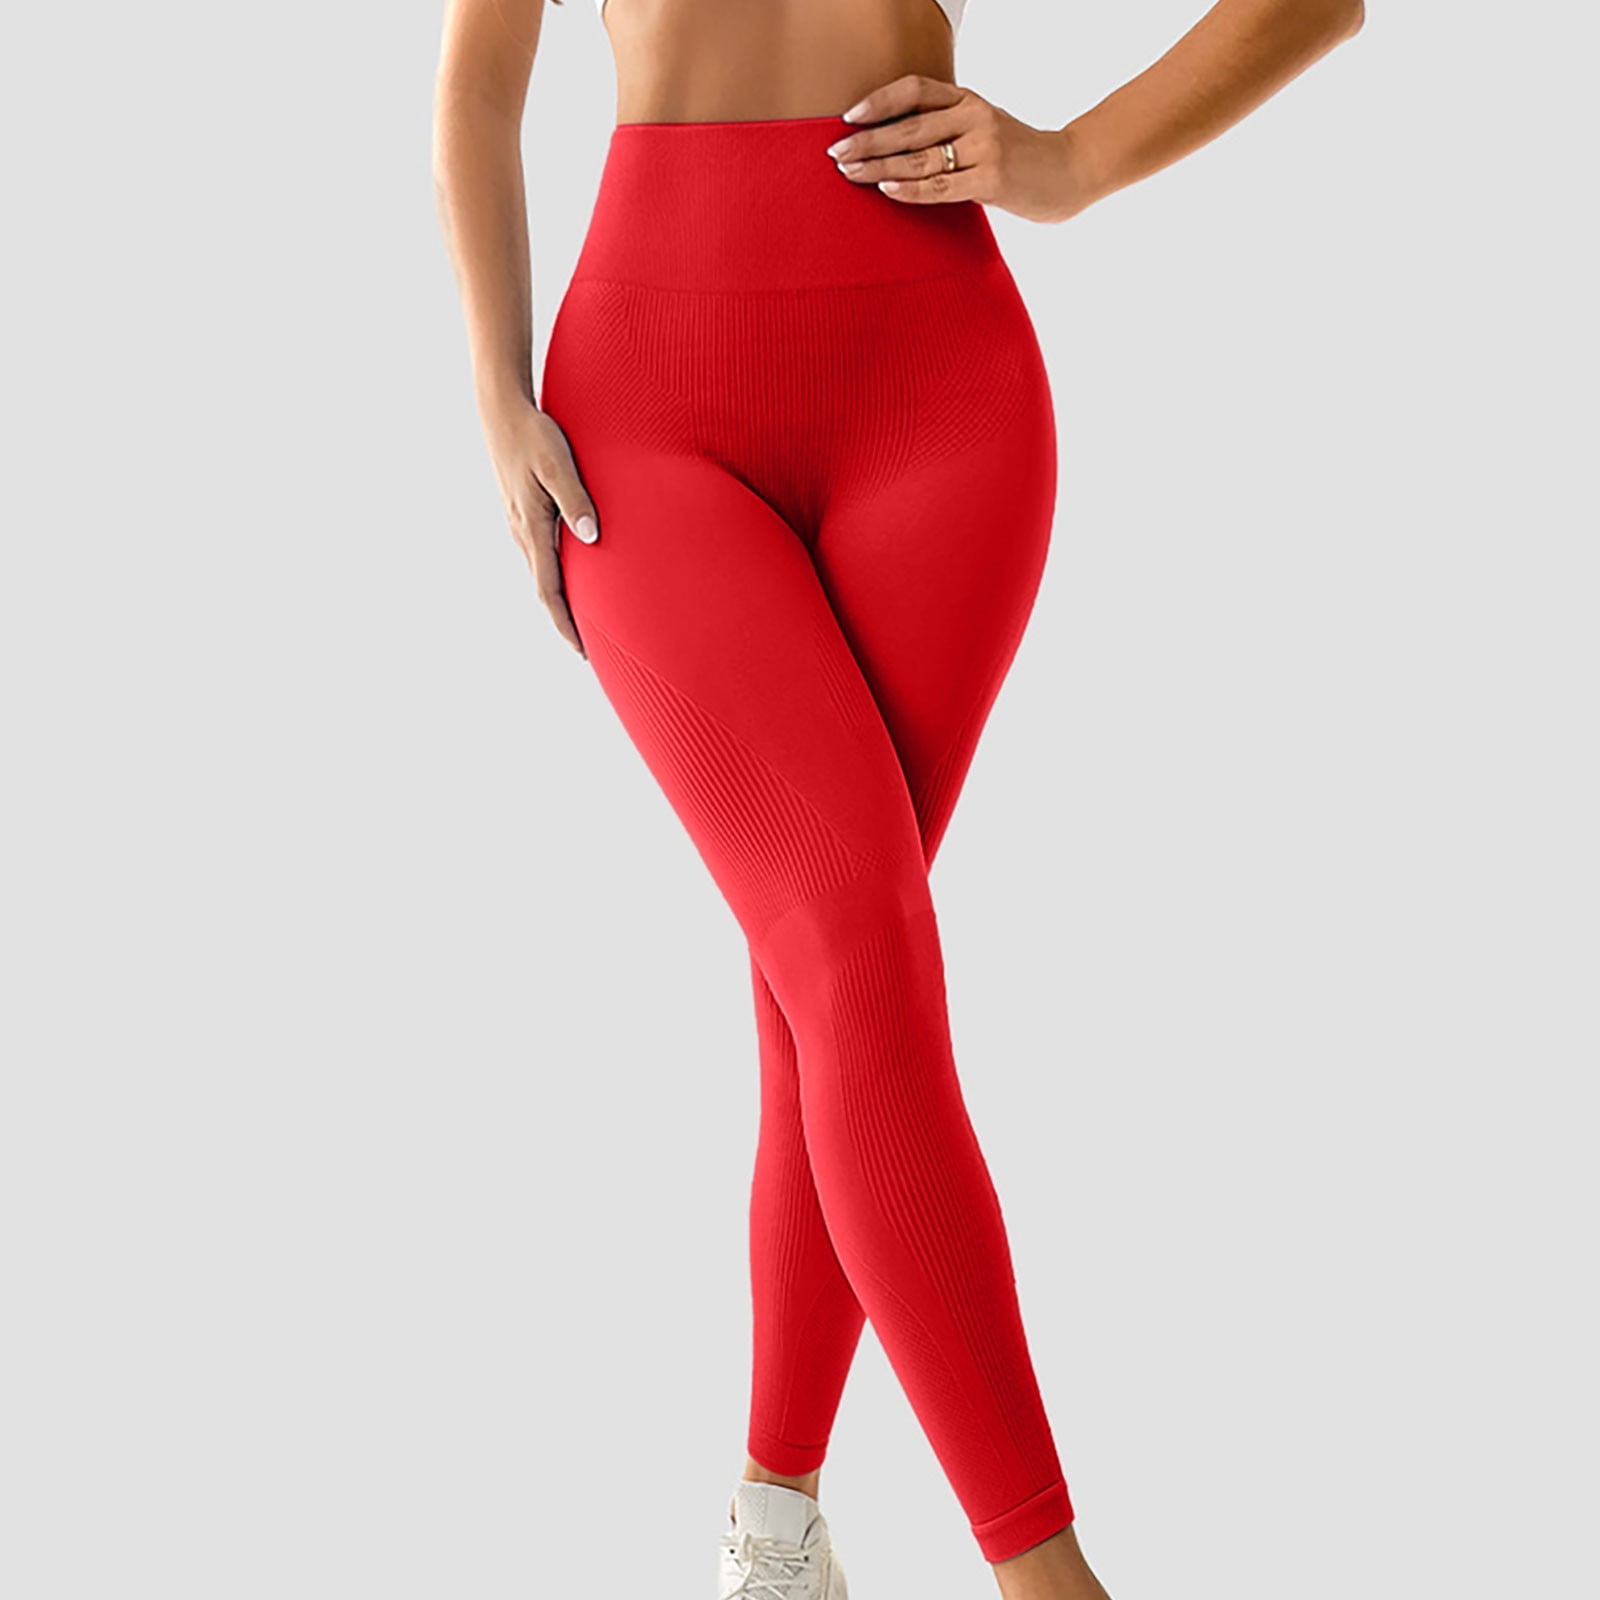 Yoga Pants Women's High Waist Hip Lift Sports Fitness leggings - AliExpress